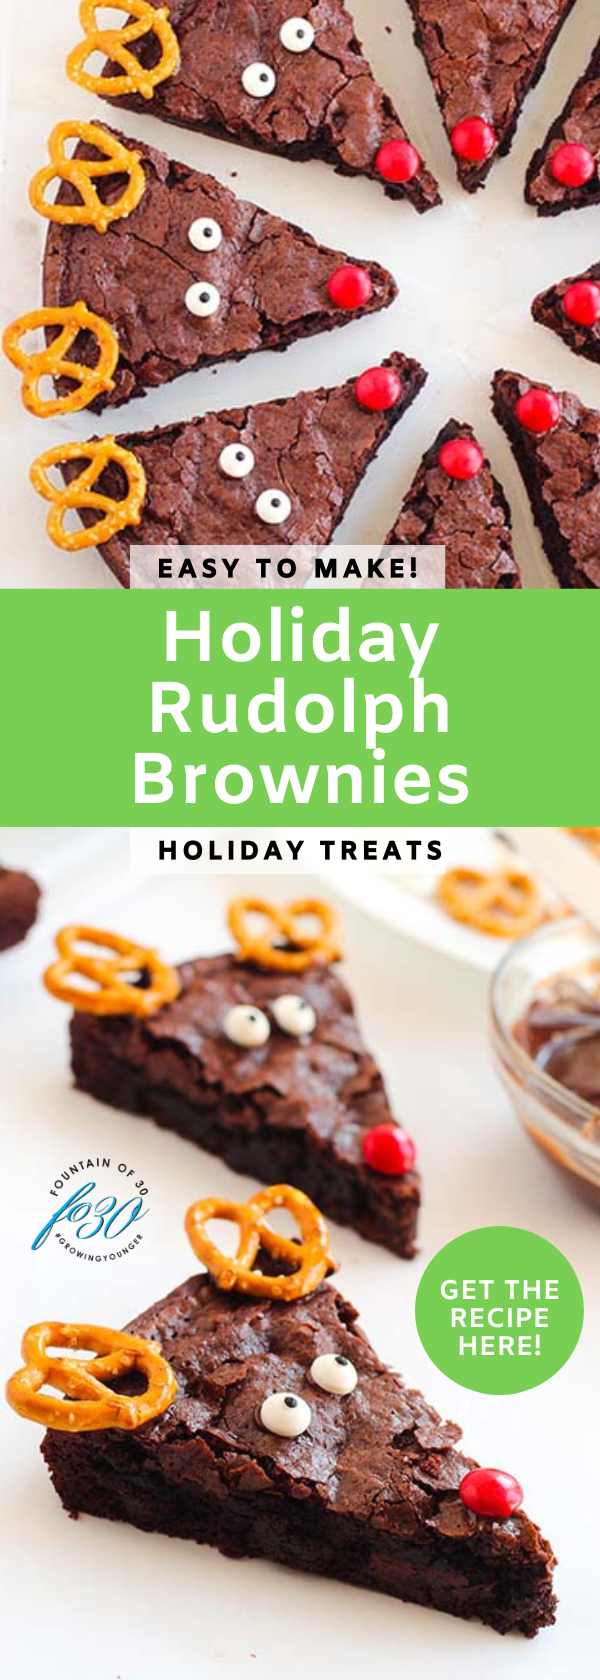 rudolph brownies holiday treats fountainof30